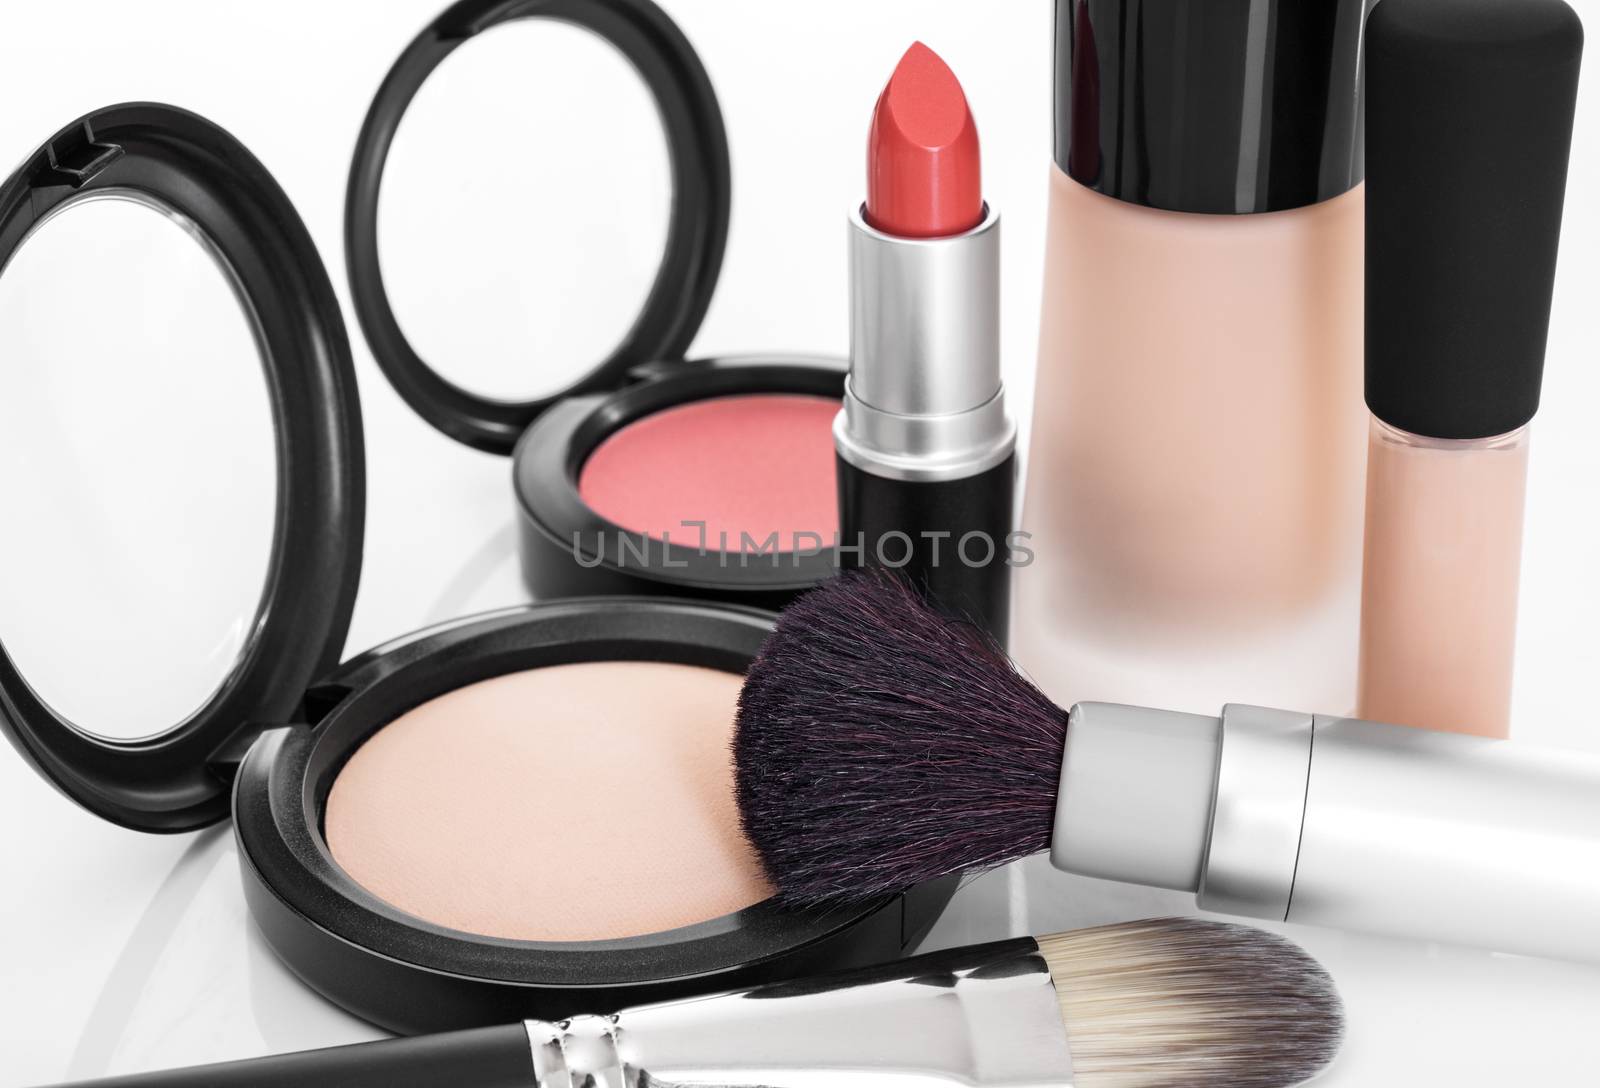 Elegant makeup collection. Foundation, concealer, face powder, blush, lipstick, brushes.